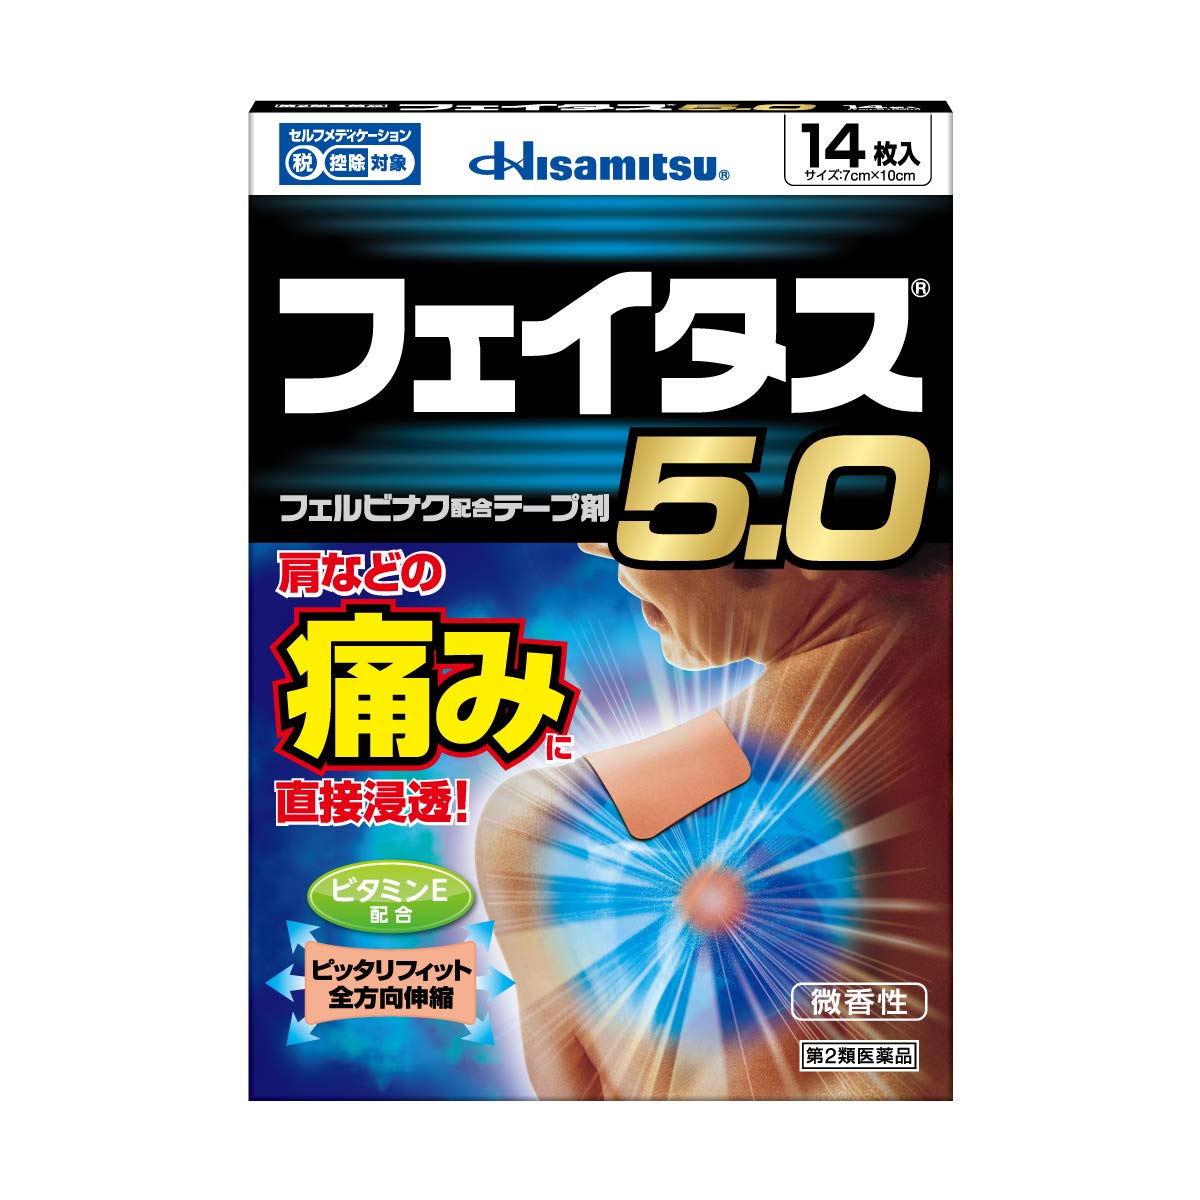 Hisamitsu Feitasu - Обезболивающий пластырь, 7×10 см, 14 шт